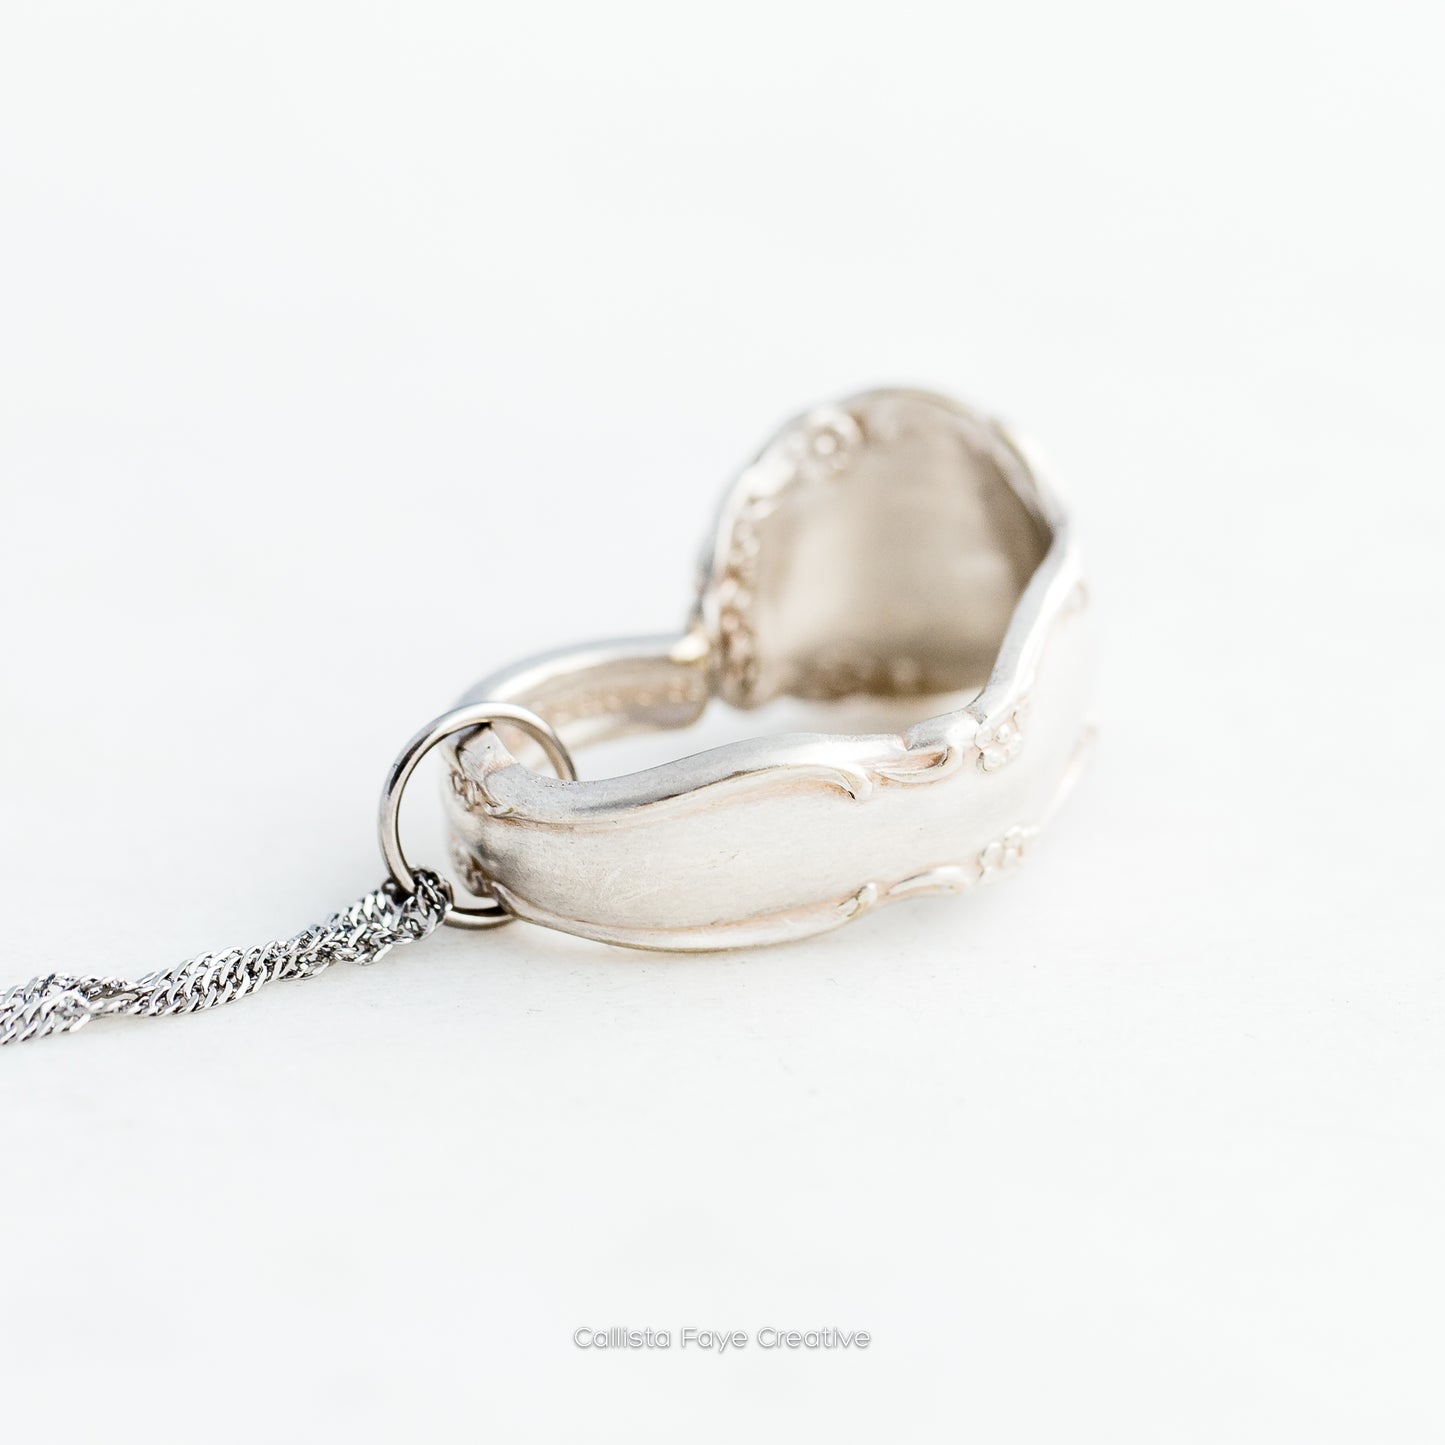 Flirtation 1959, Small Floating Heart, Vintage Spoon Jewelry Hearts callistafaye   